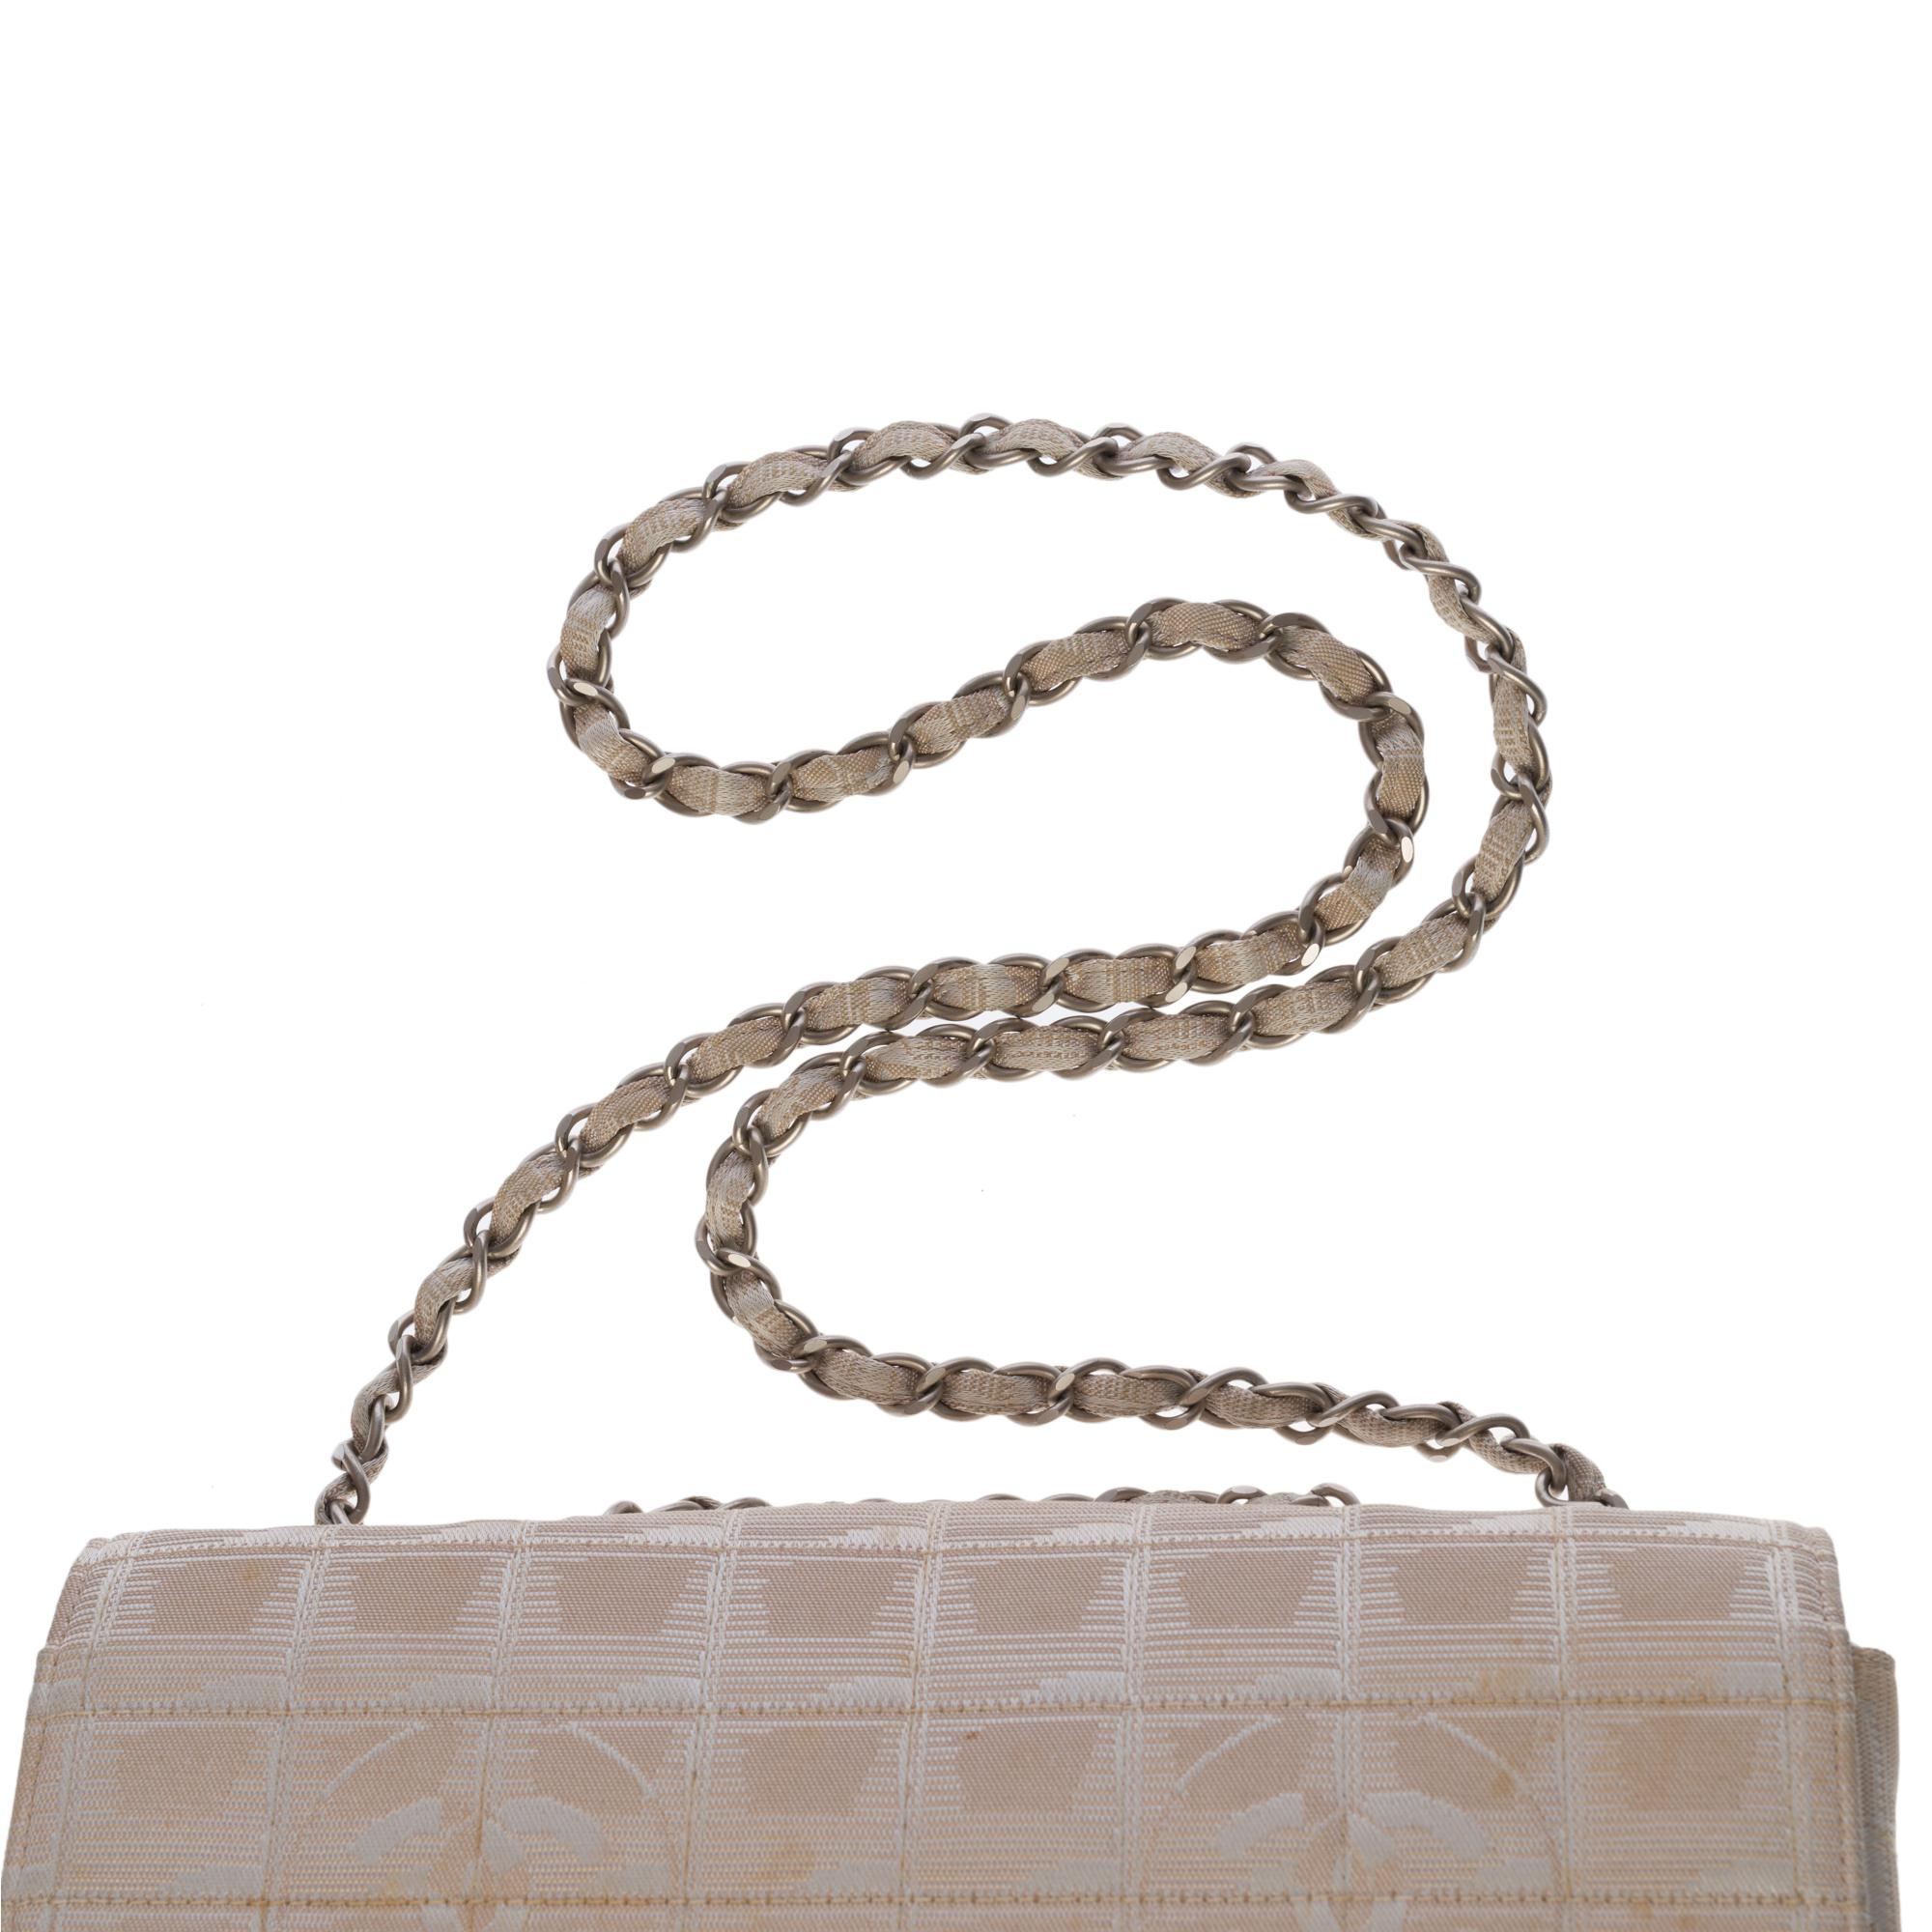 Chanel Timeless Travel Line flap shoulder bag in beige woven nylon, SHW 1